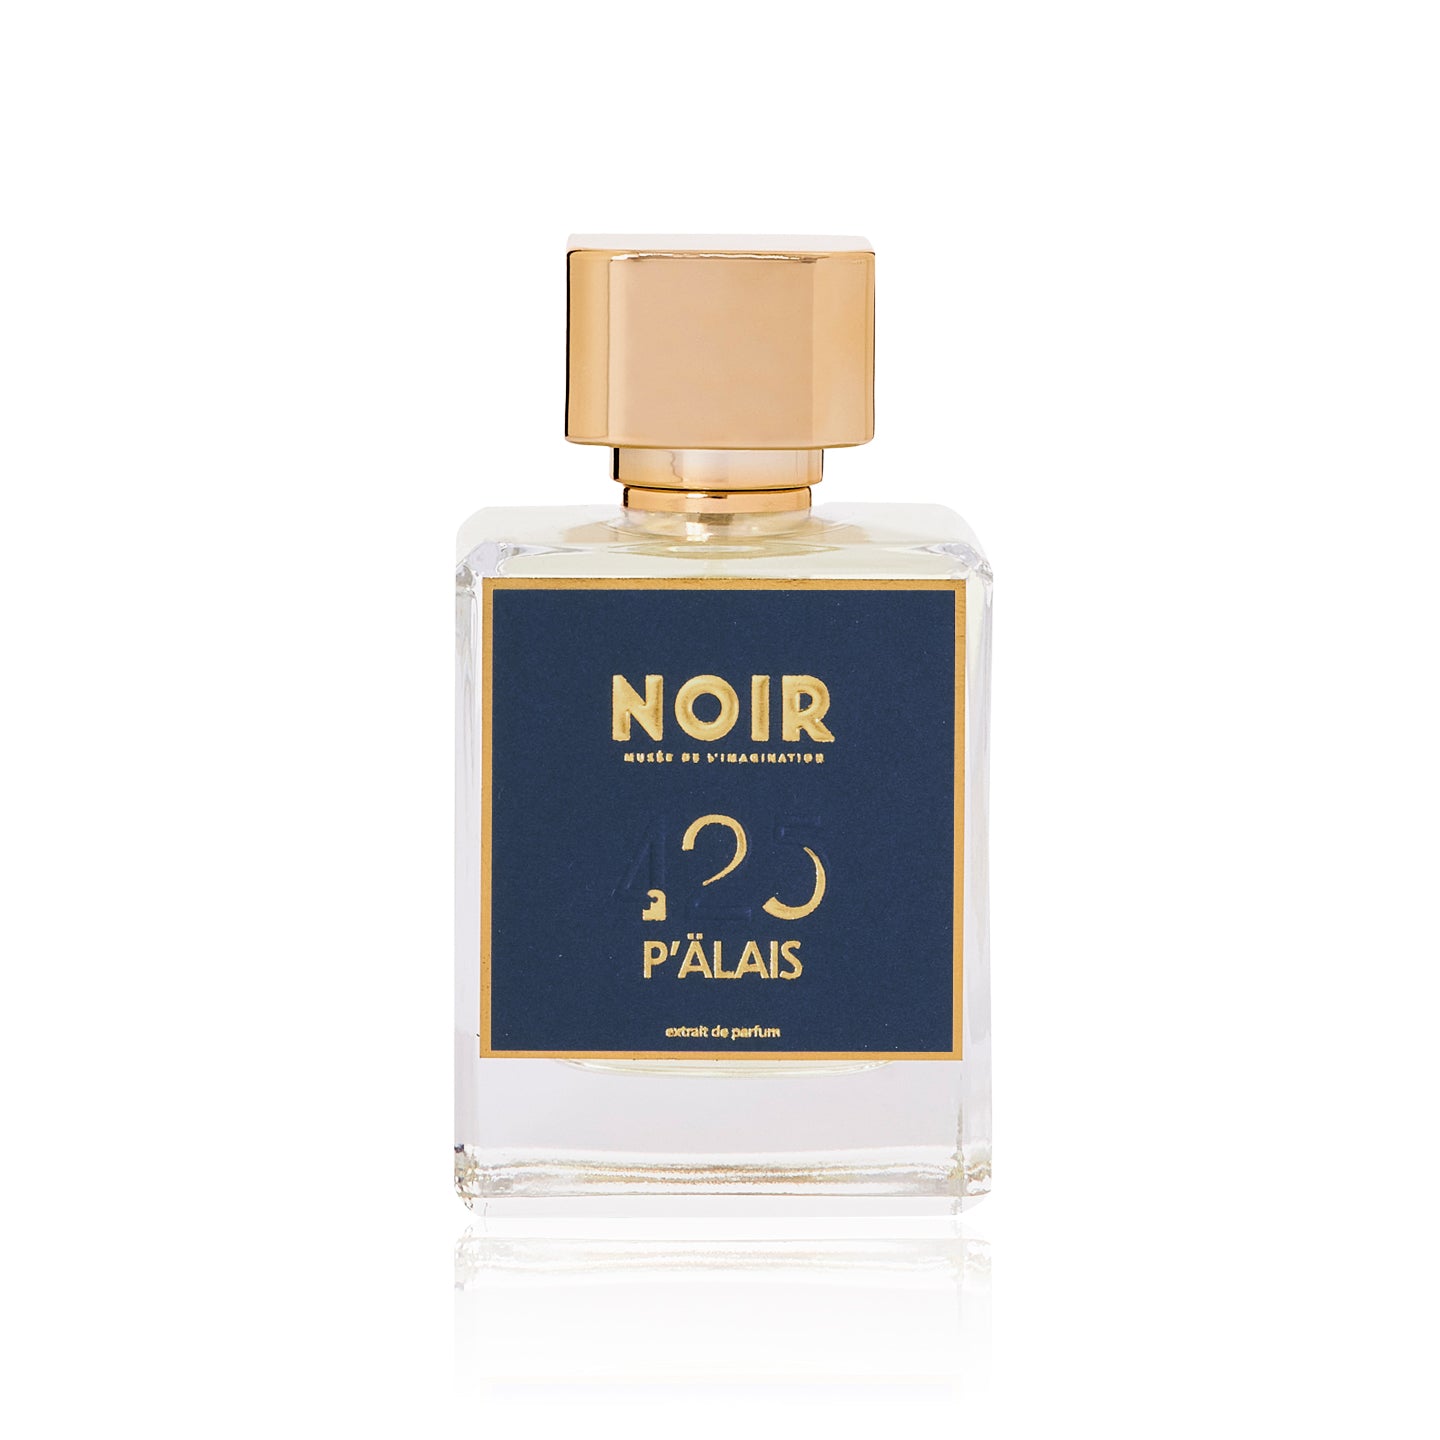 No 425 P'ALAIS Extrait De Parfum 100Ml